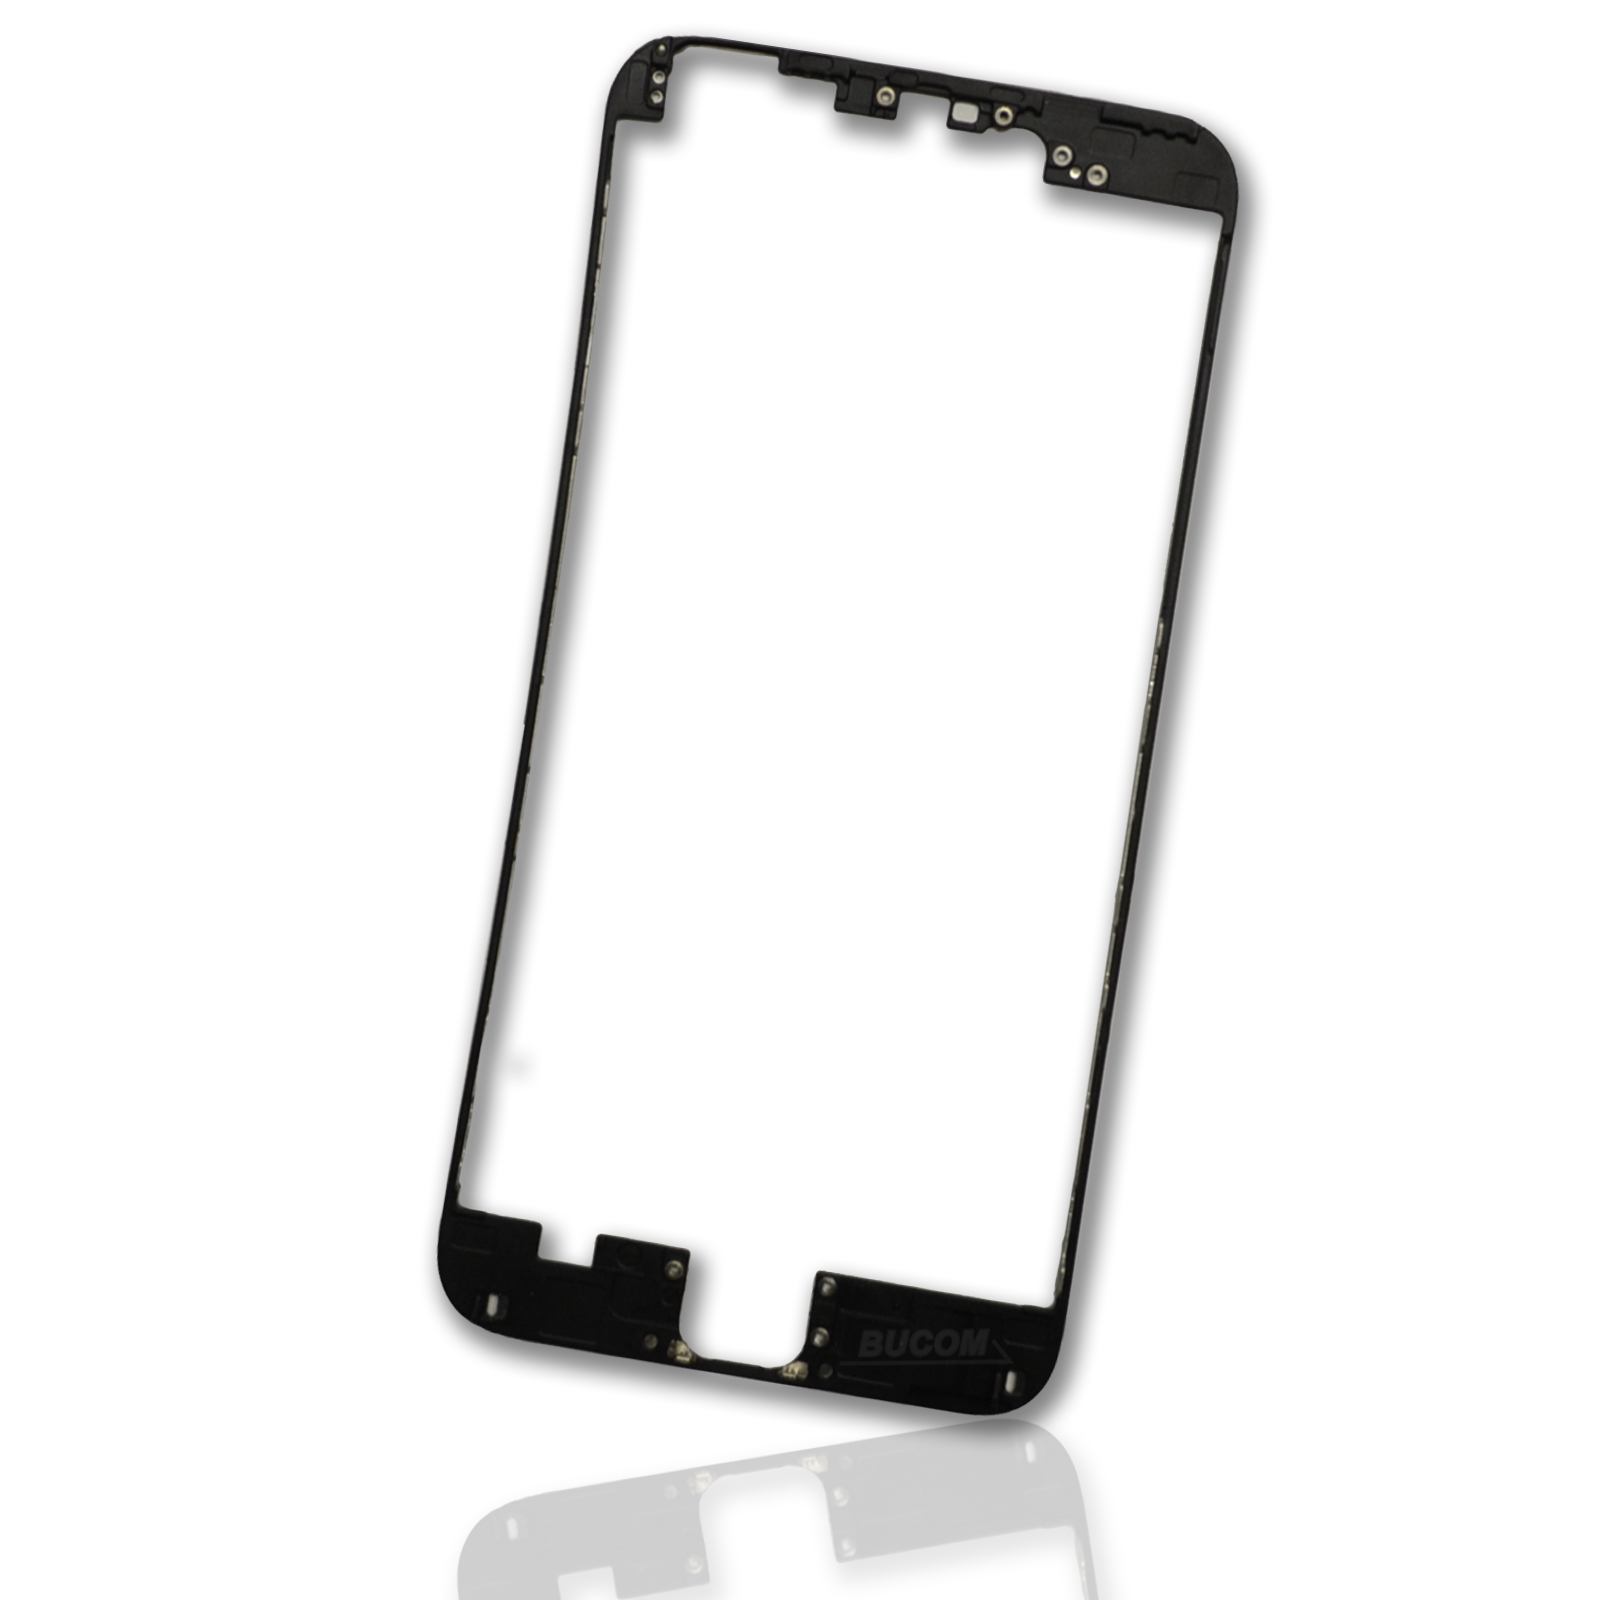 Für Iphone 6 PLUS Touchscreen LCD Rahmen middle Frame Mittelrahmen Bezel Housing Case schwarz